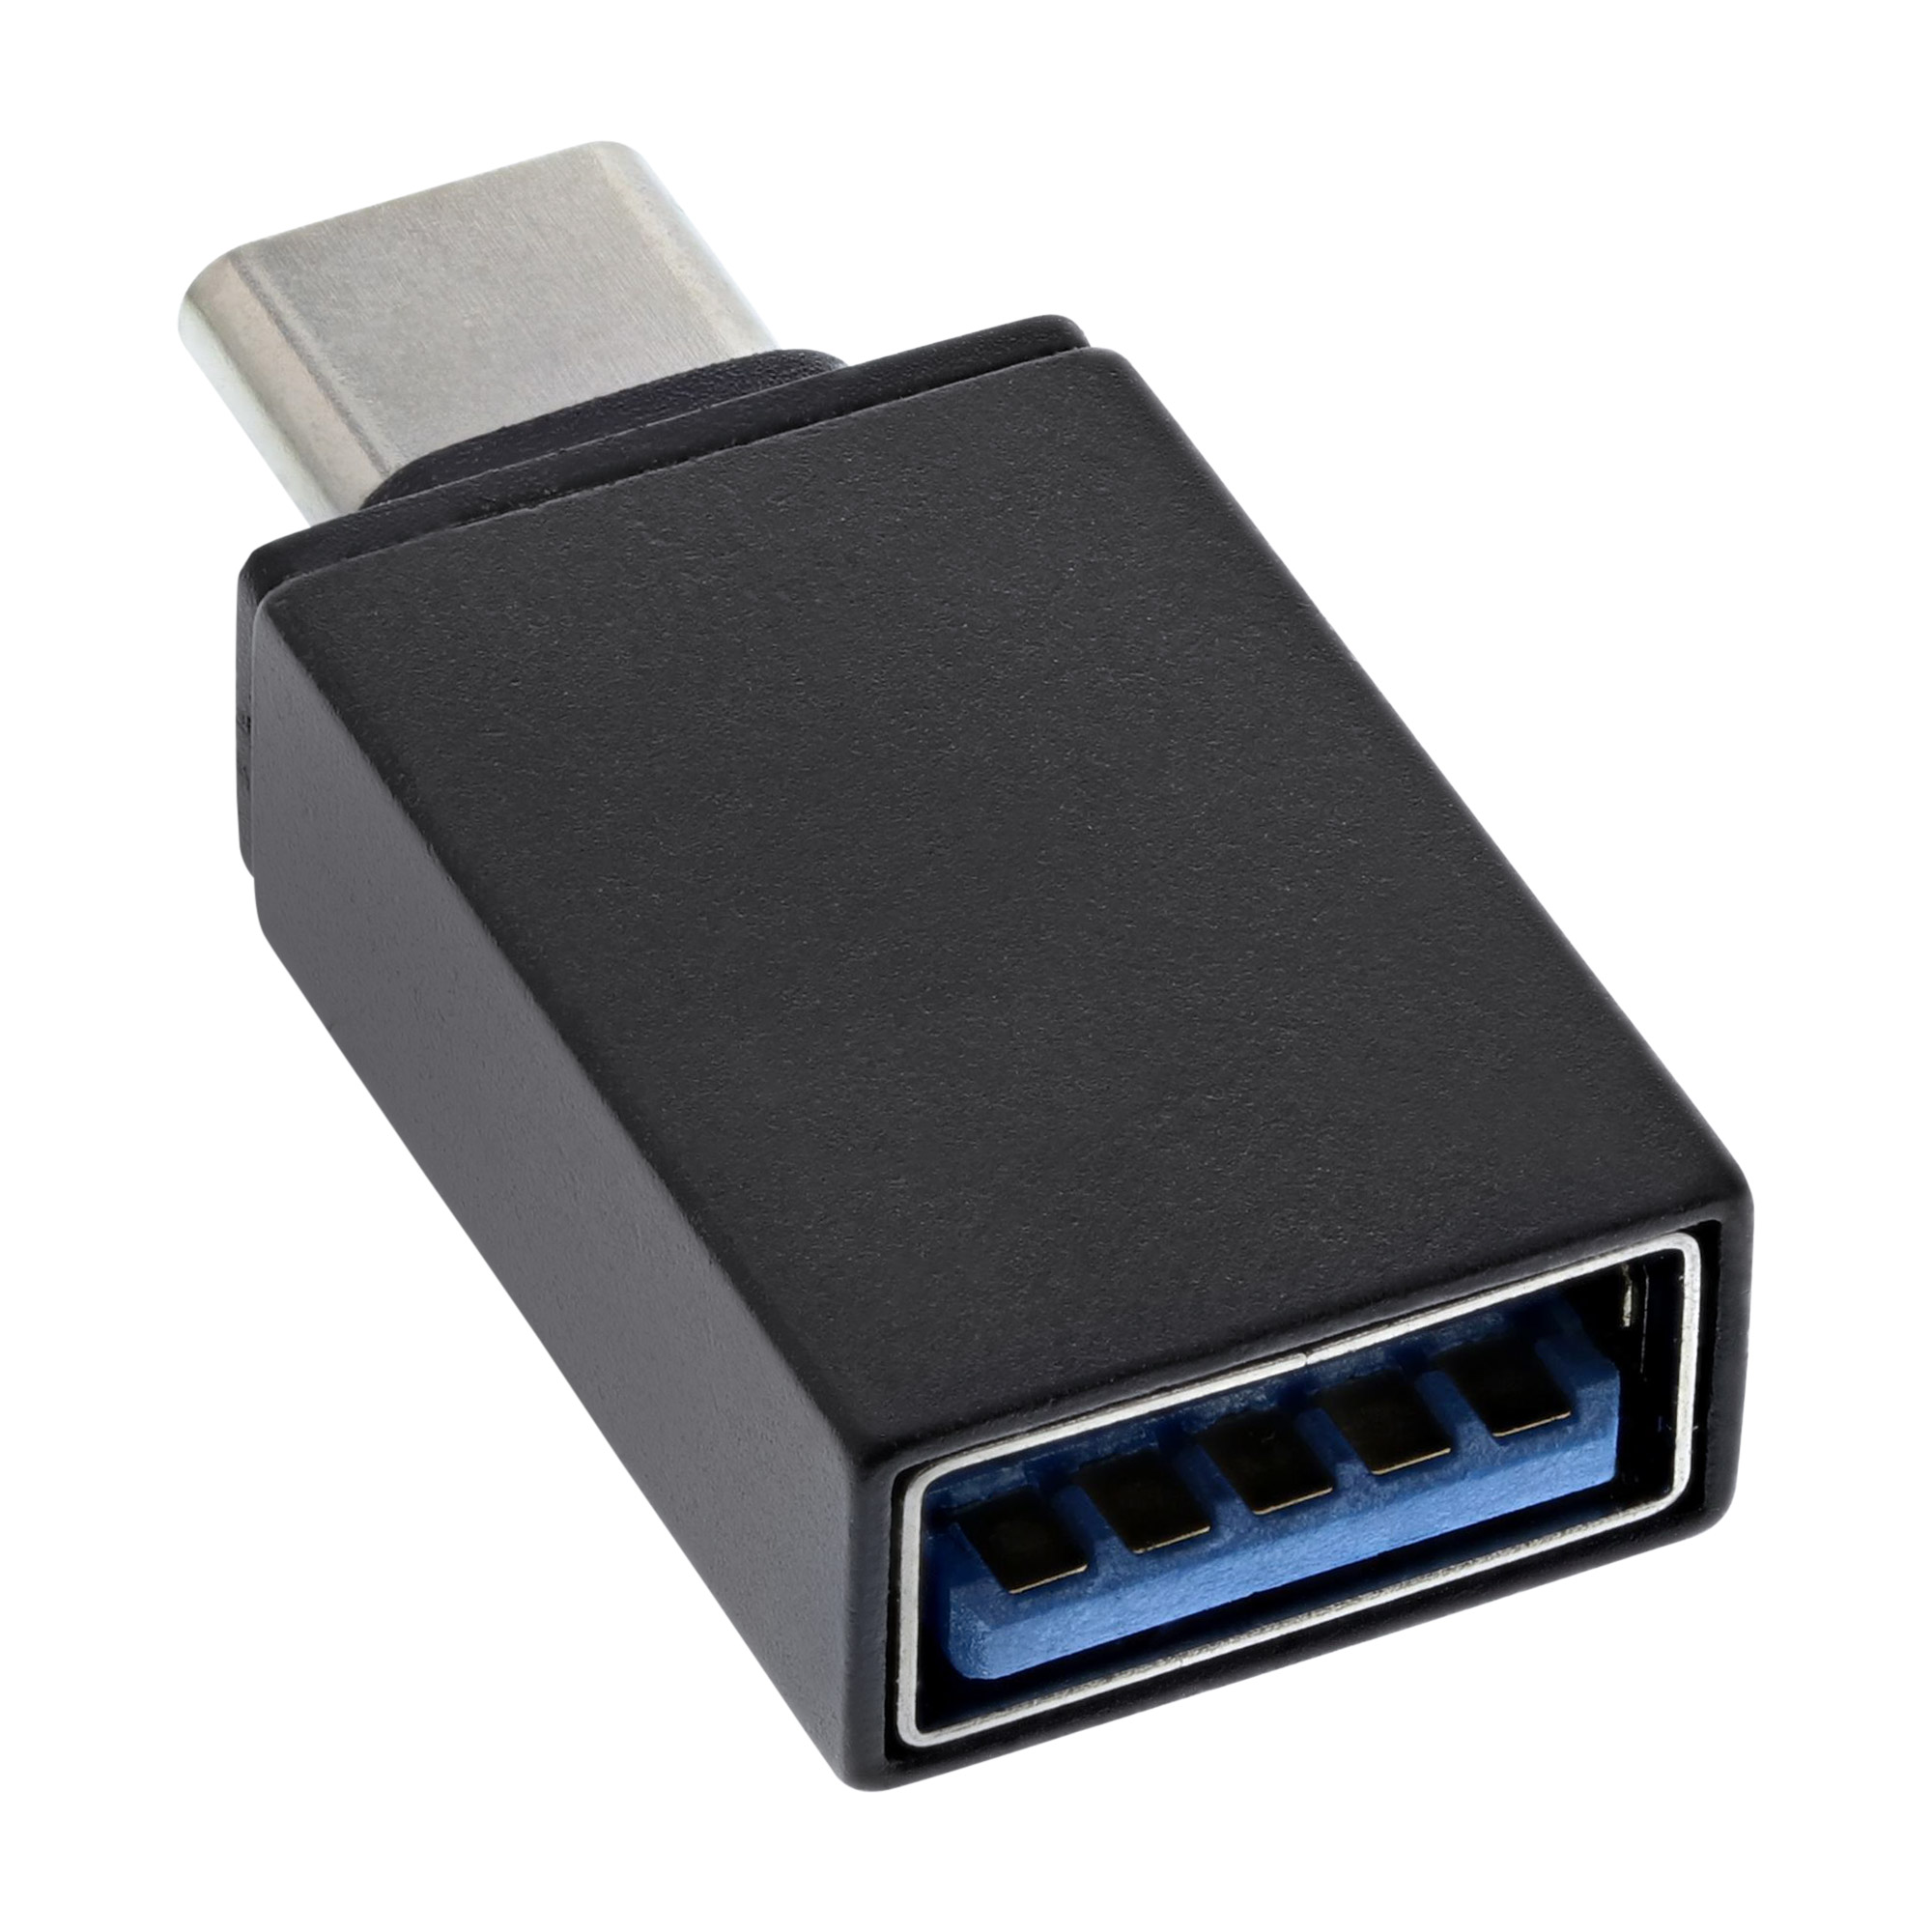 InLine USB 3.1 Adapter - USB-Adapter - USB-C (M)